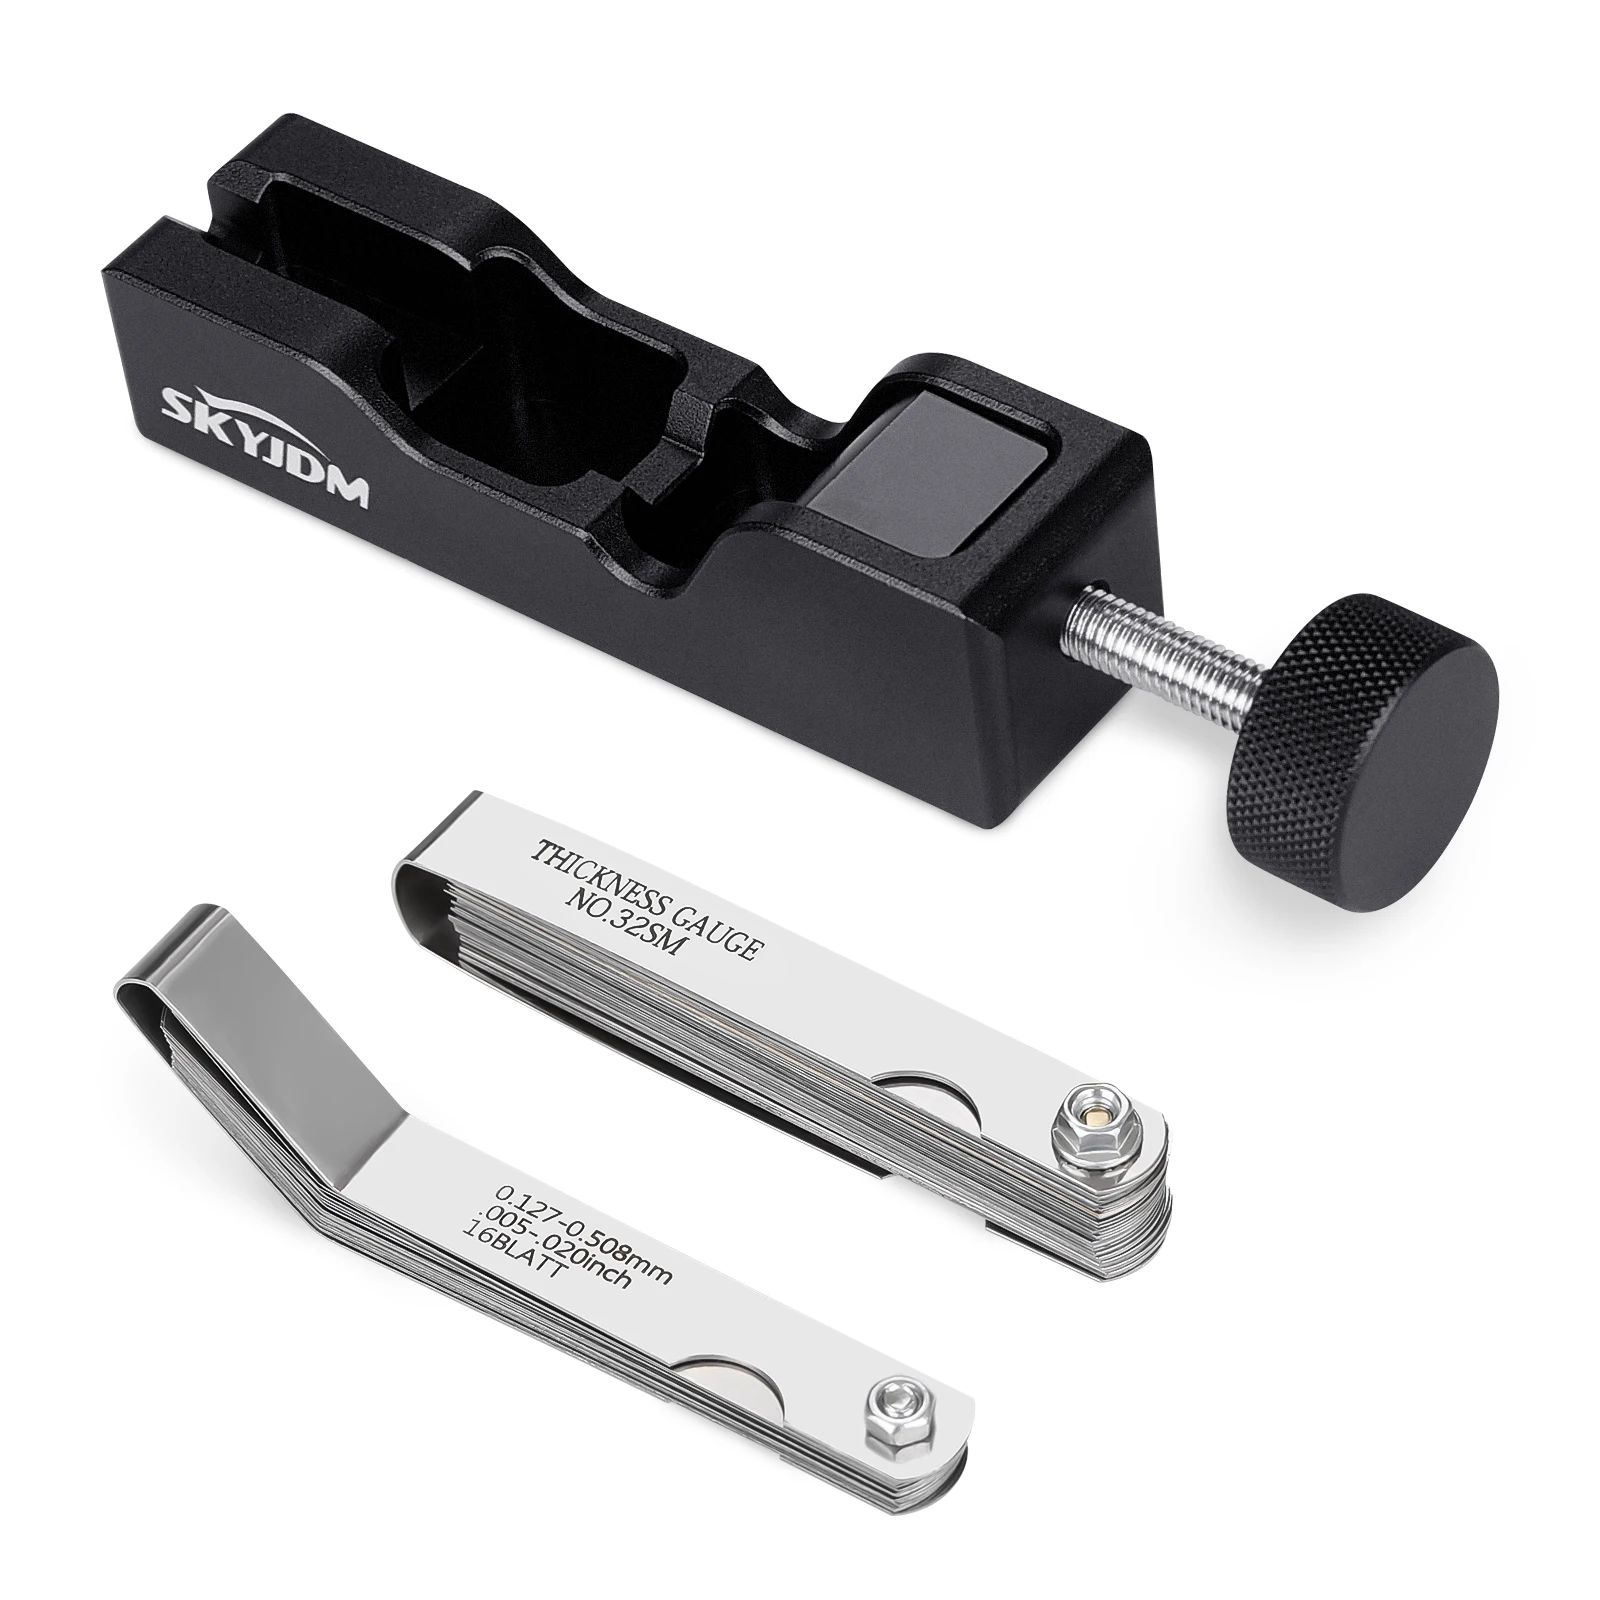 

Universal Spark Plug Gap Tool Spark Plug Caliper With Feeler Gauge For Most 10mm 12mm 14mm 16mm Gap Adjustment Tool Accessories